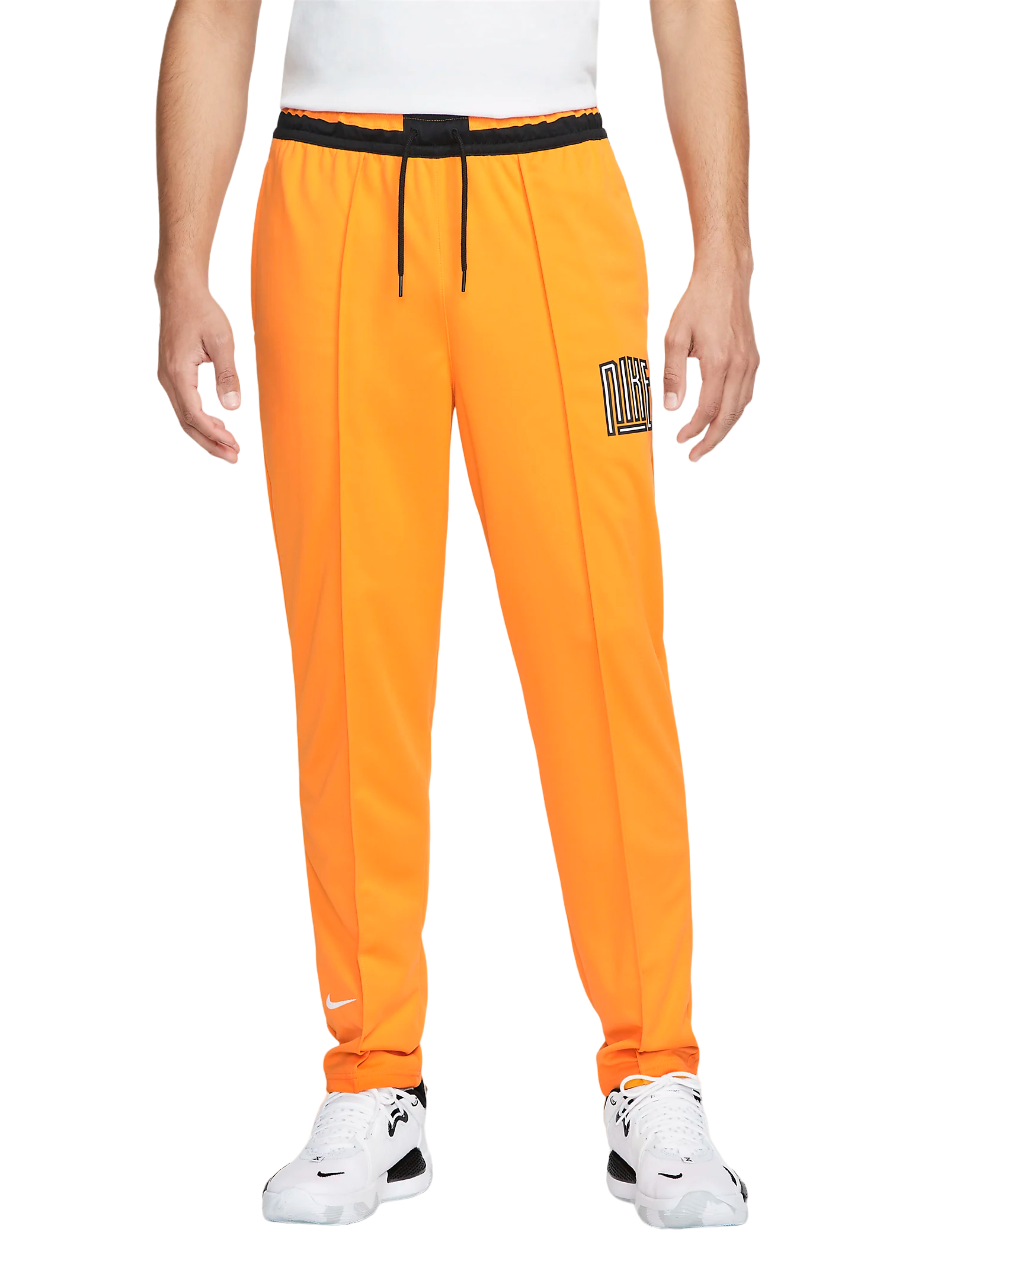 Nike pantaloni per basket da uomo arancione